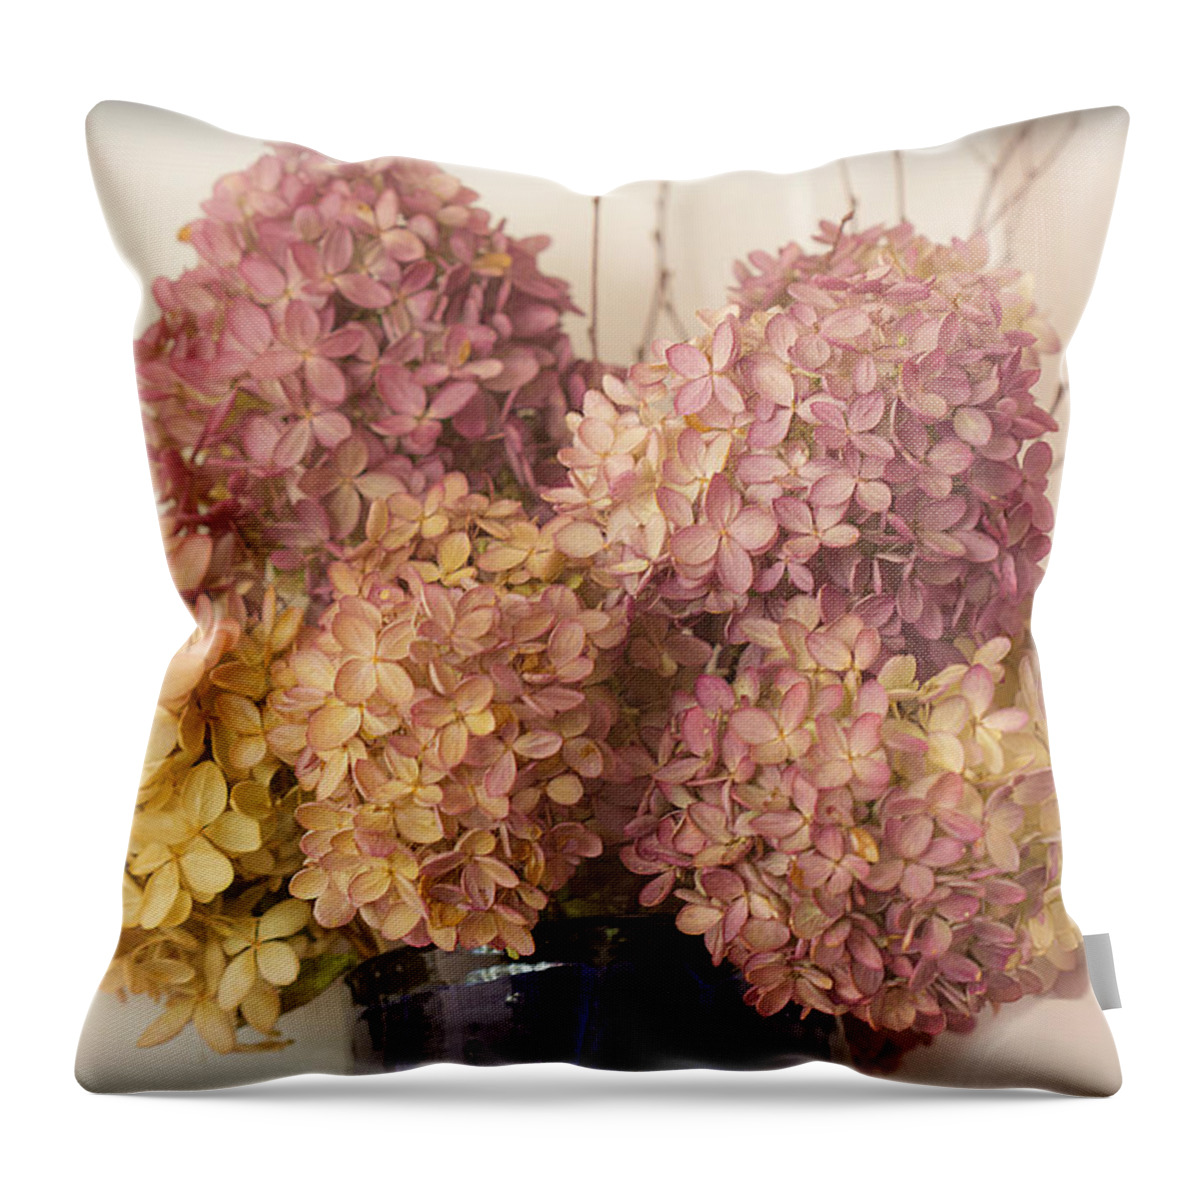 Fine Art Throw Pillow featuring the photograph Dried Hydrangea by Michael Friedman